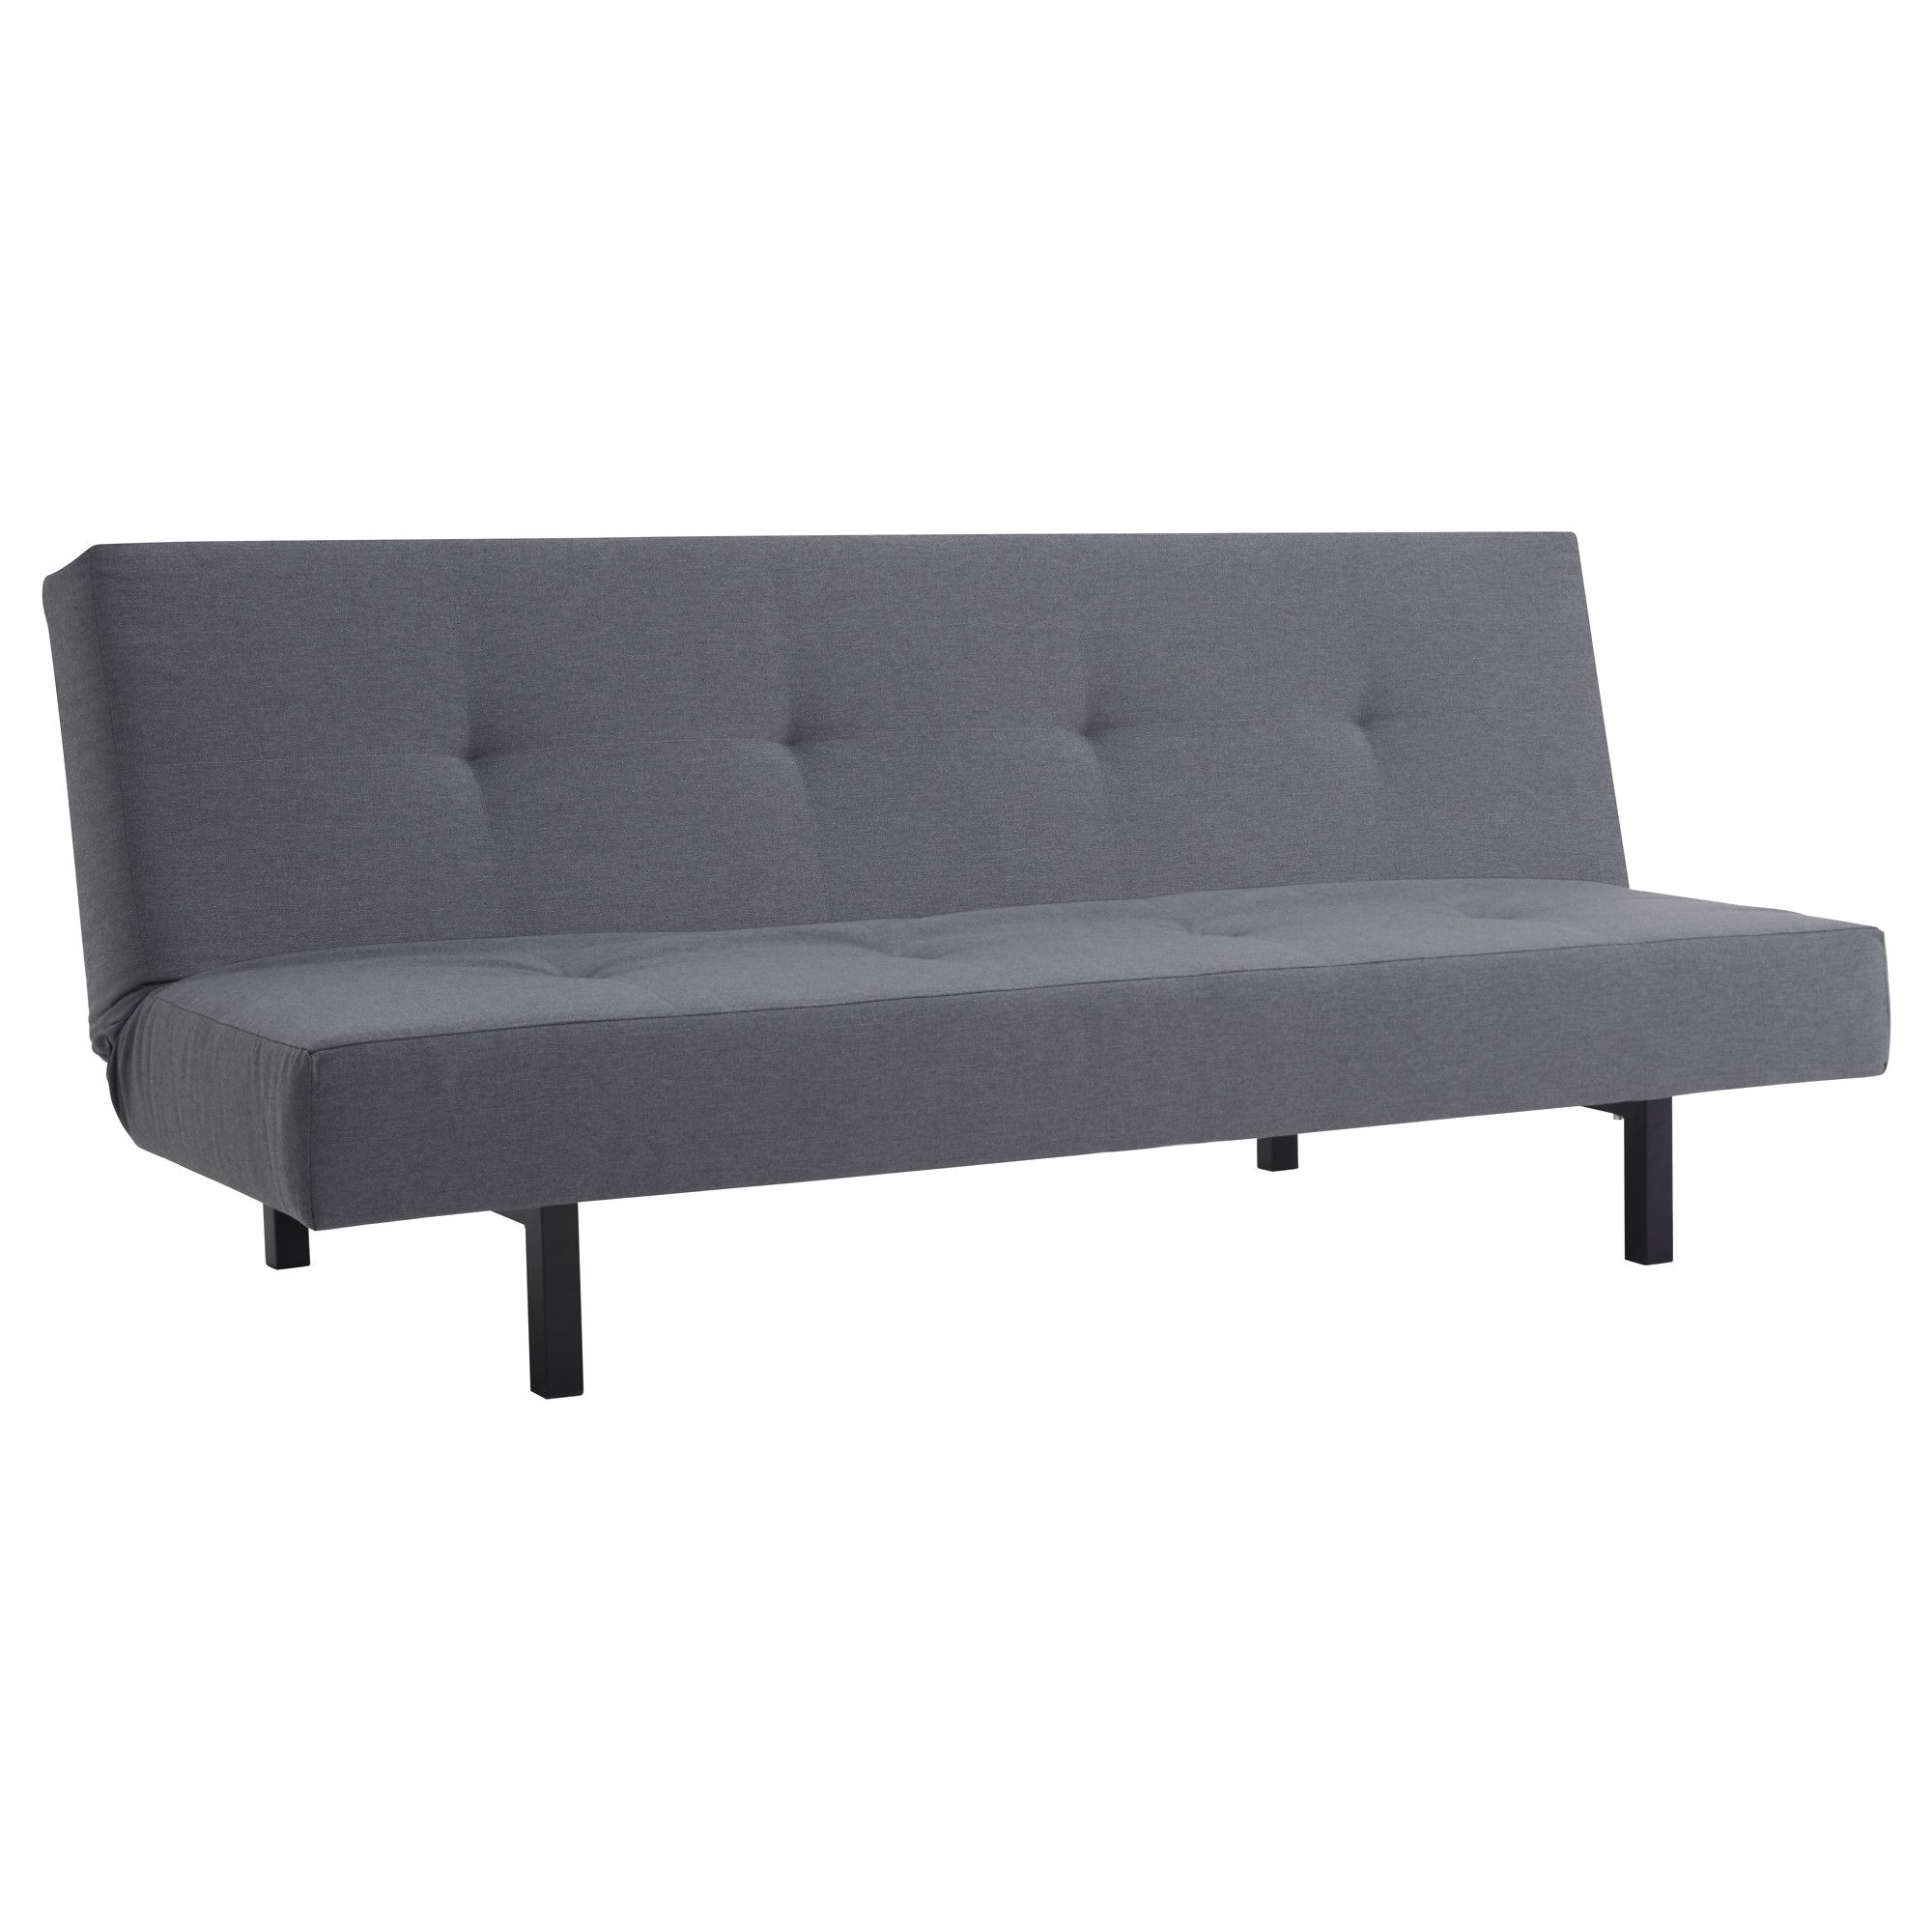 Most Current Balkarp Sleeper Sofa – Vissle Gray – Ikea Intended For Ikea Loveseat Sleeper Sofas (View 15 of 20)